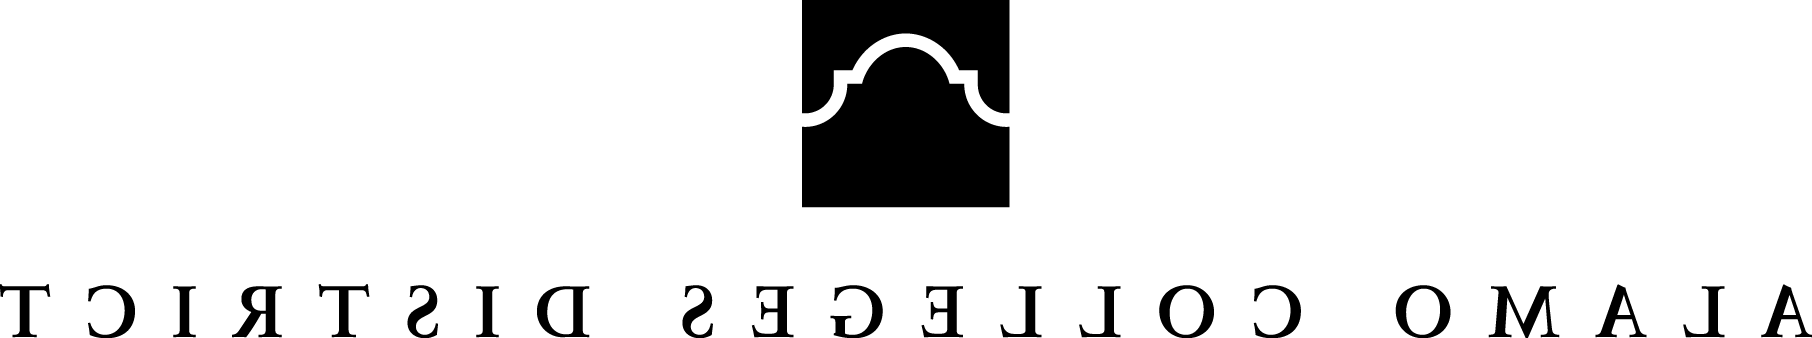 黑色堆叠Logo (PNG)